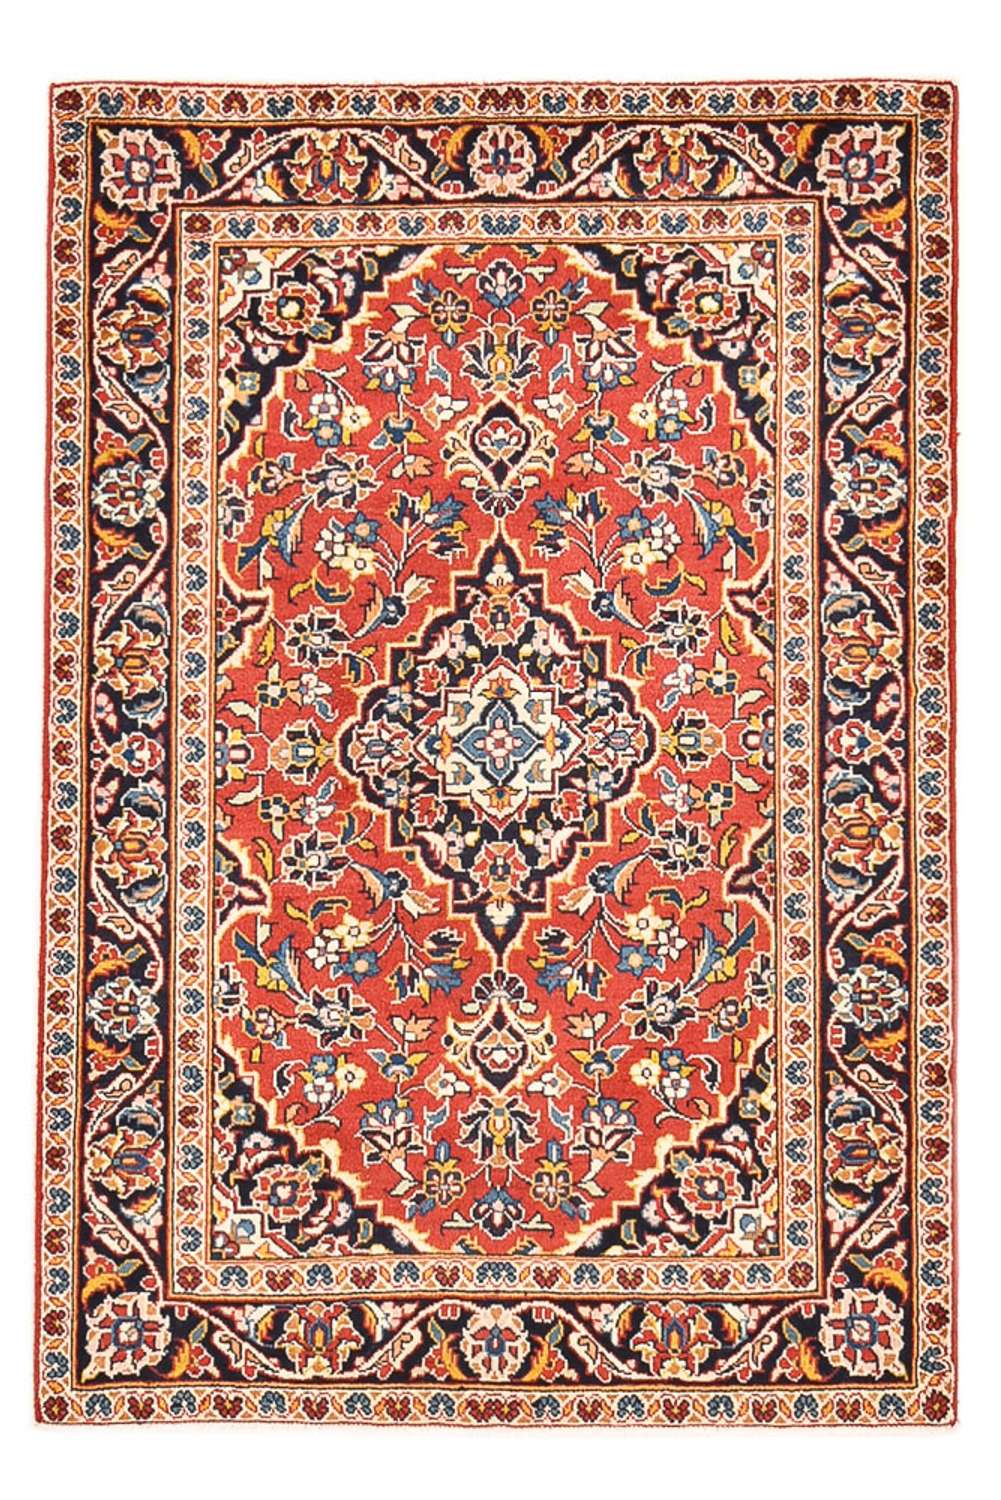 Tapis persan - Keshan - 148 x 100 cm - rouge